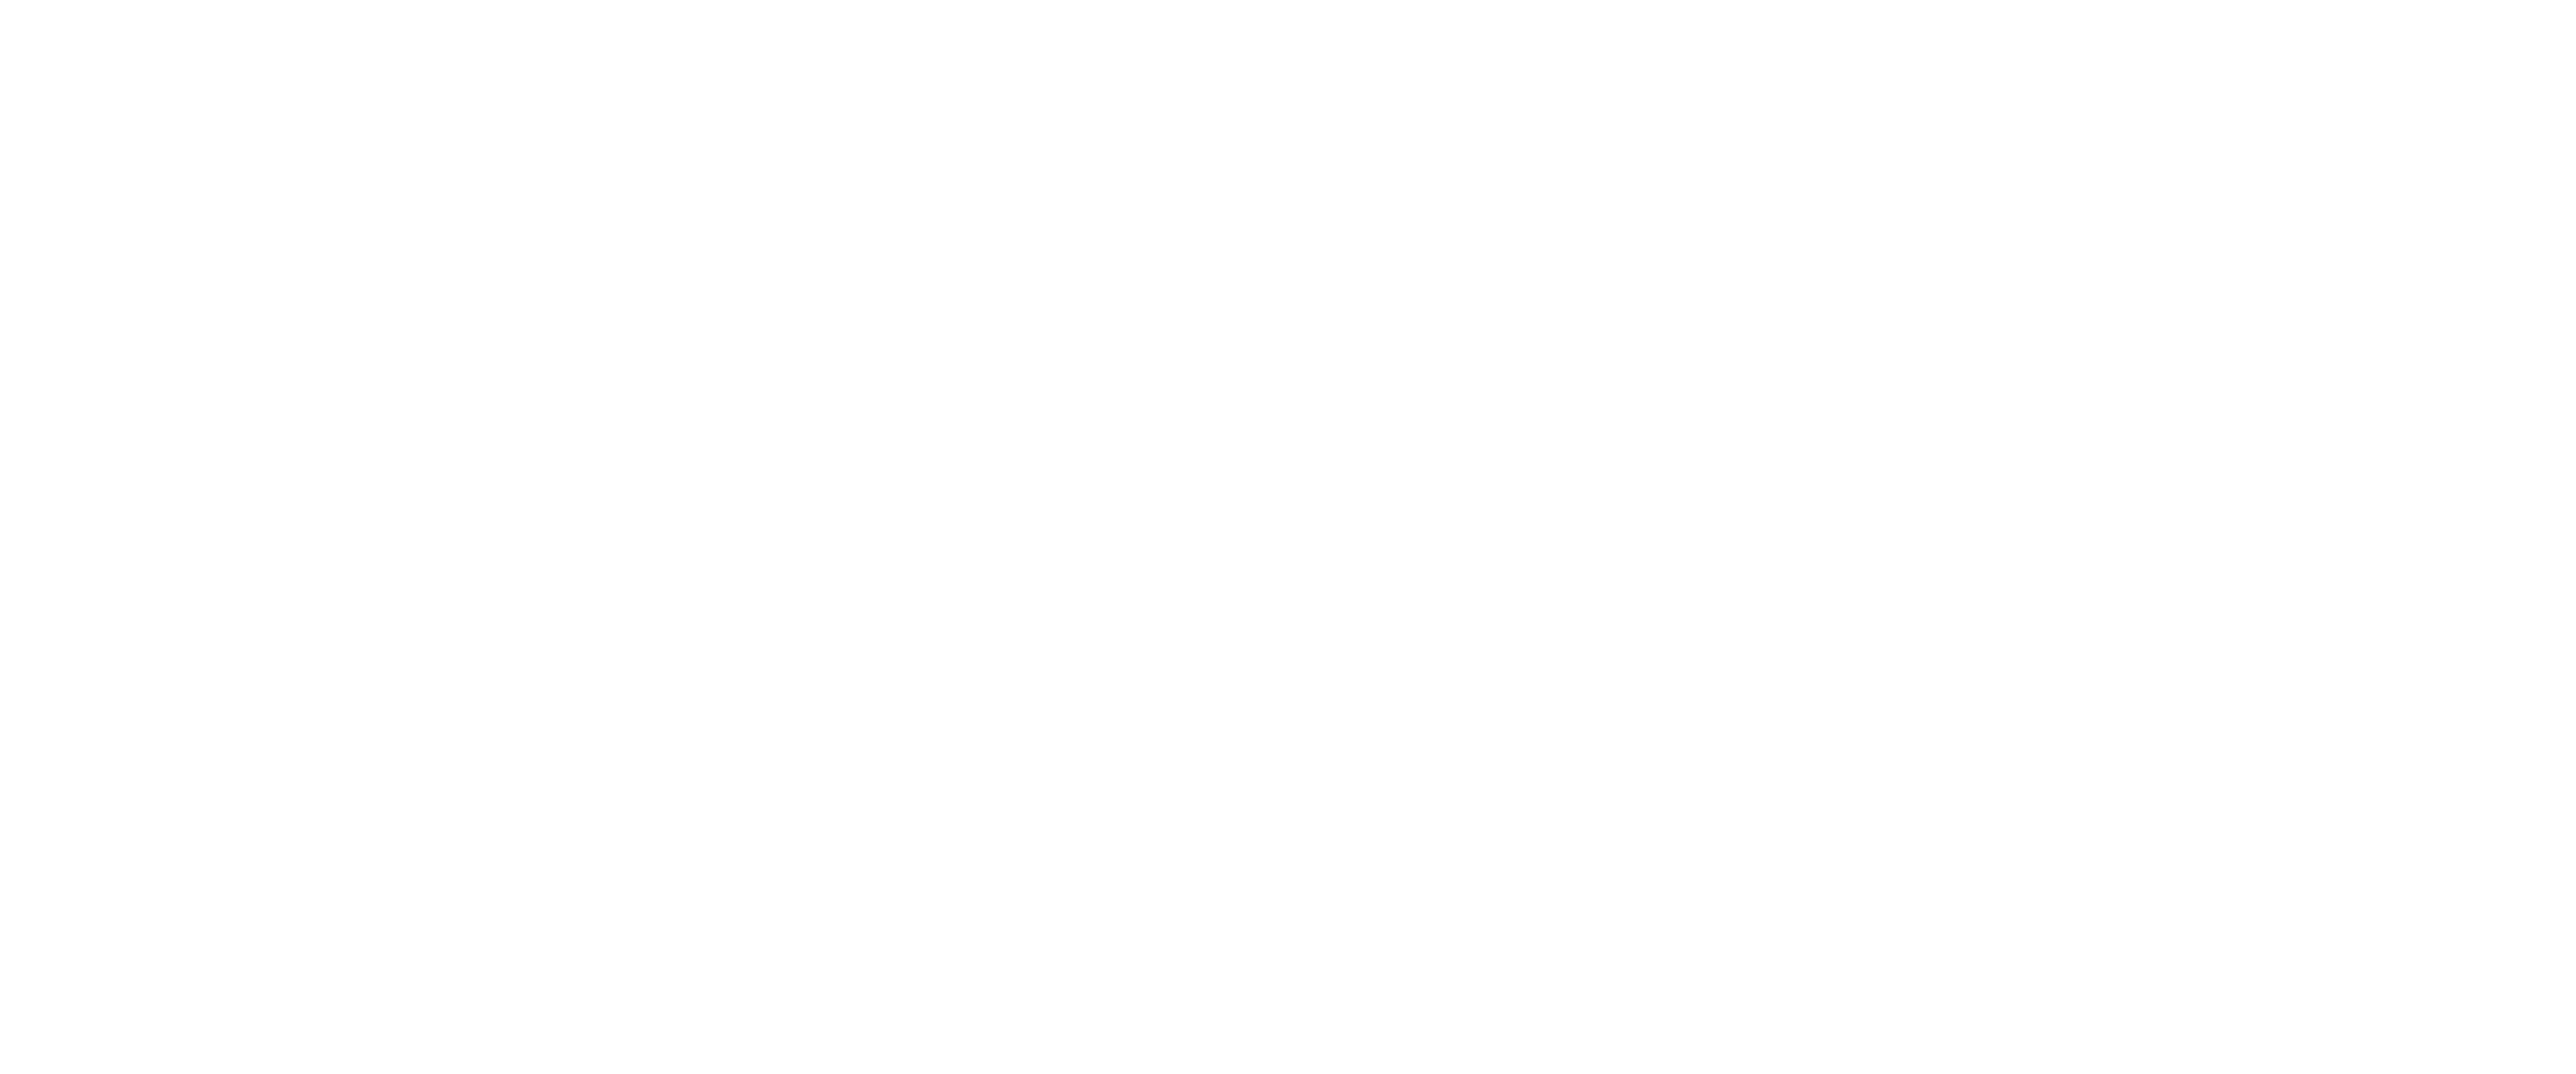 Panorama World Leader In Autonomous Telecom Intelligence